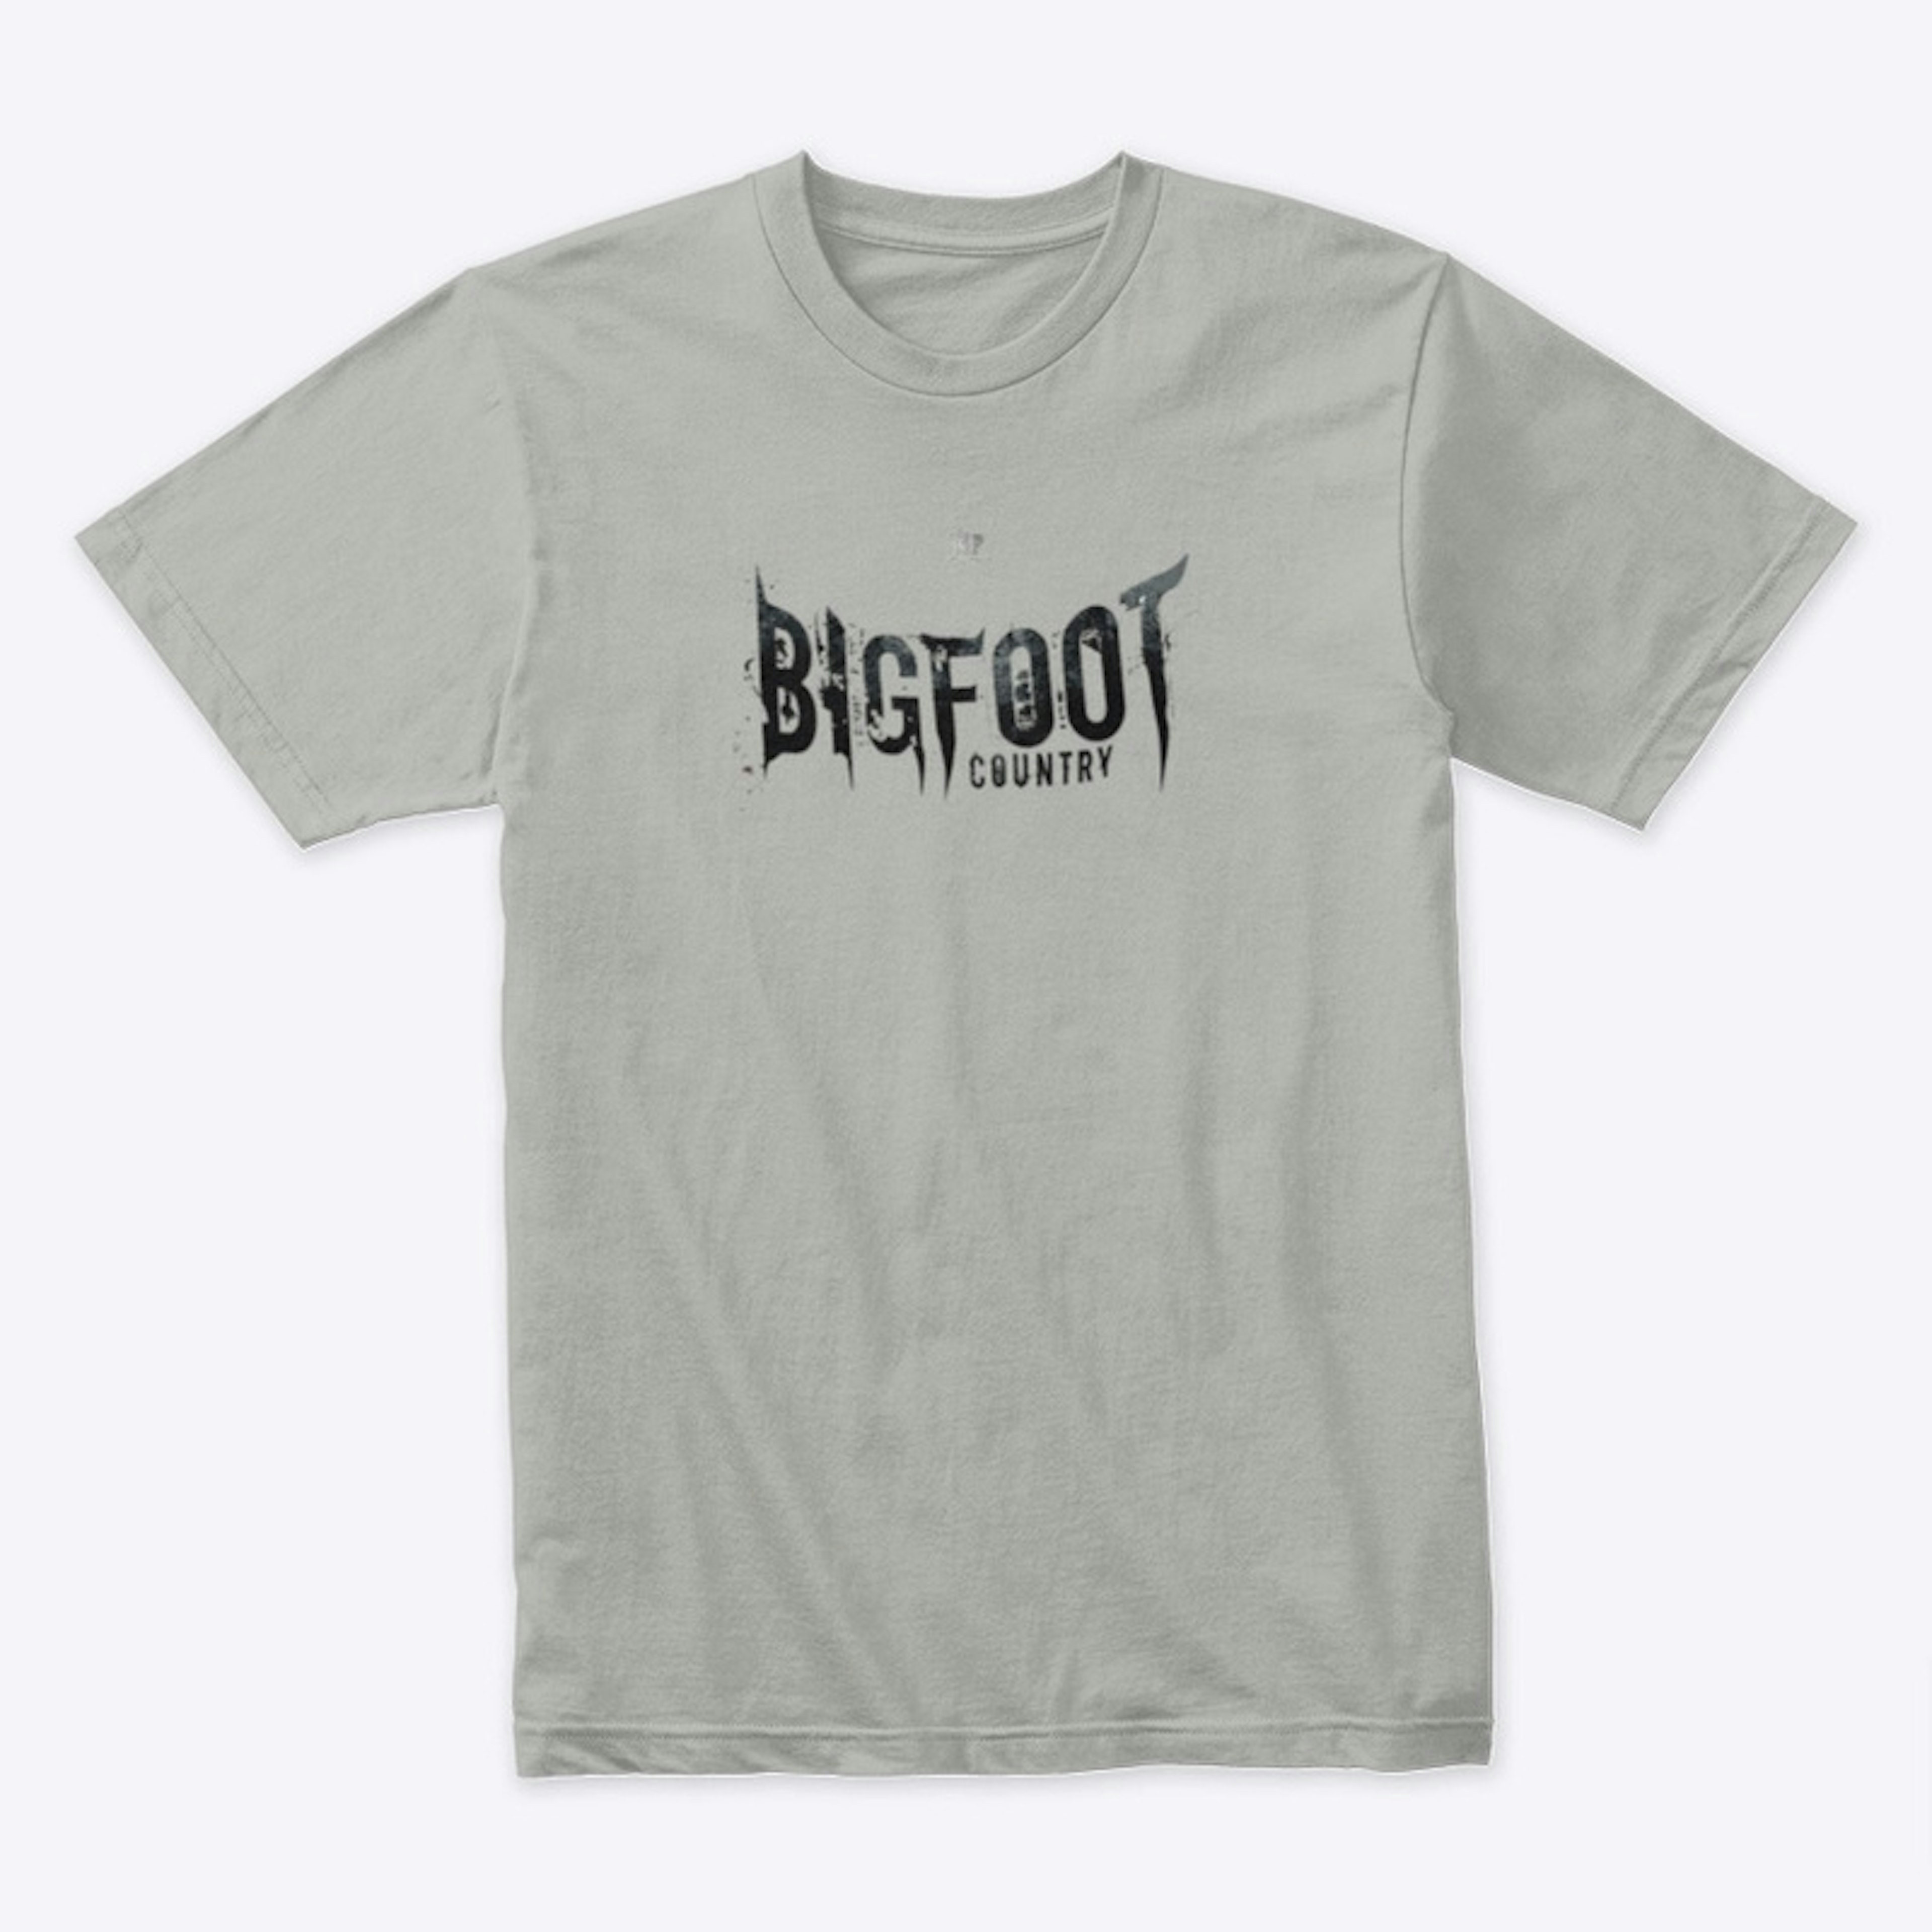 Bigfoot Country movie T-shirt